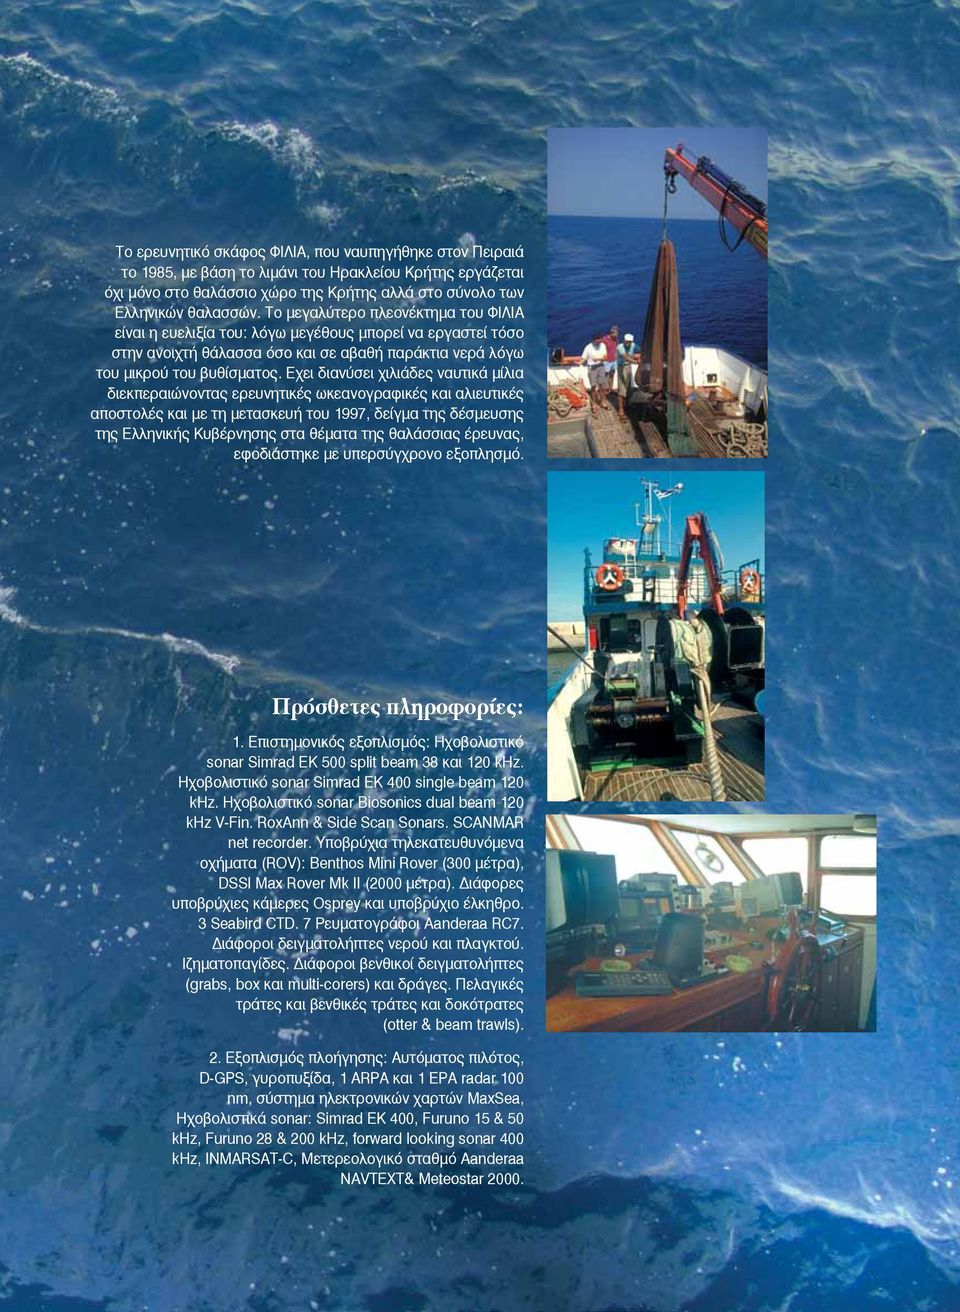 Eχει διανύσει χιλιάδες ναυτικά μίλια διεκπεραιώνοντας ερευνητικές ωκεανογραφικές και αλιευτικές αποστολές και με τη μετασκευή του 1997, δείγμα της δέσμευσης της Eλληνικής Kυβέρνησης στα θέματα της